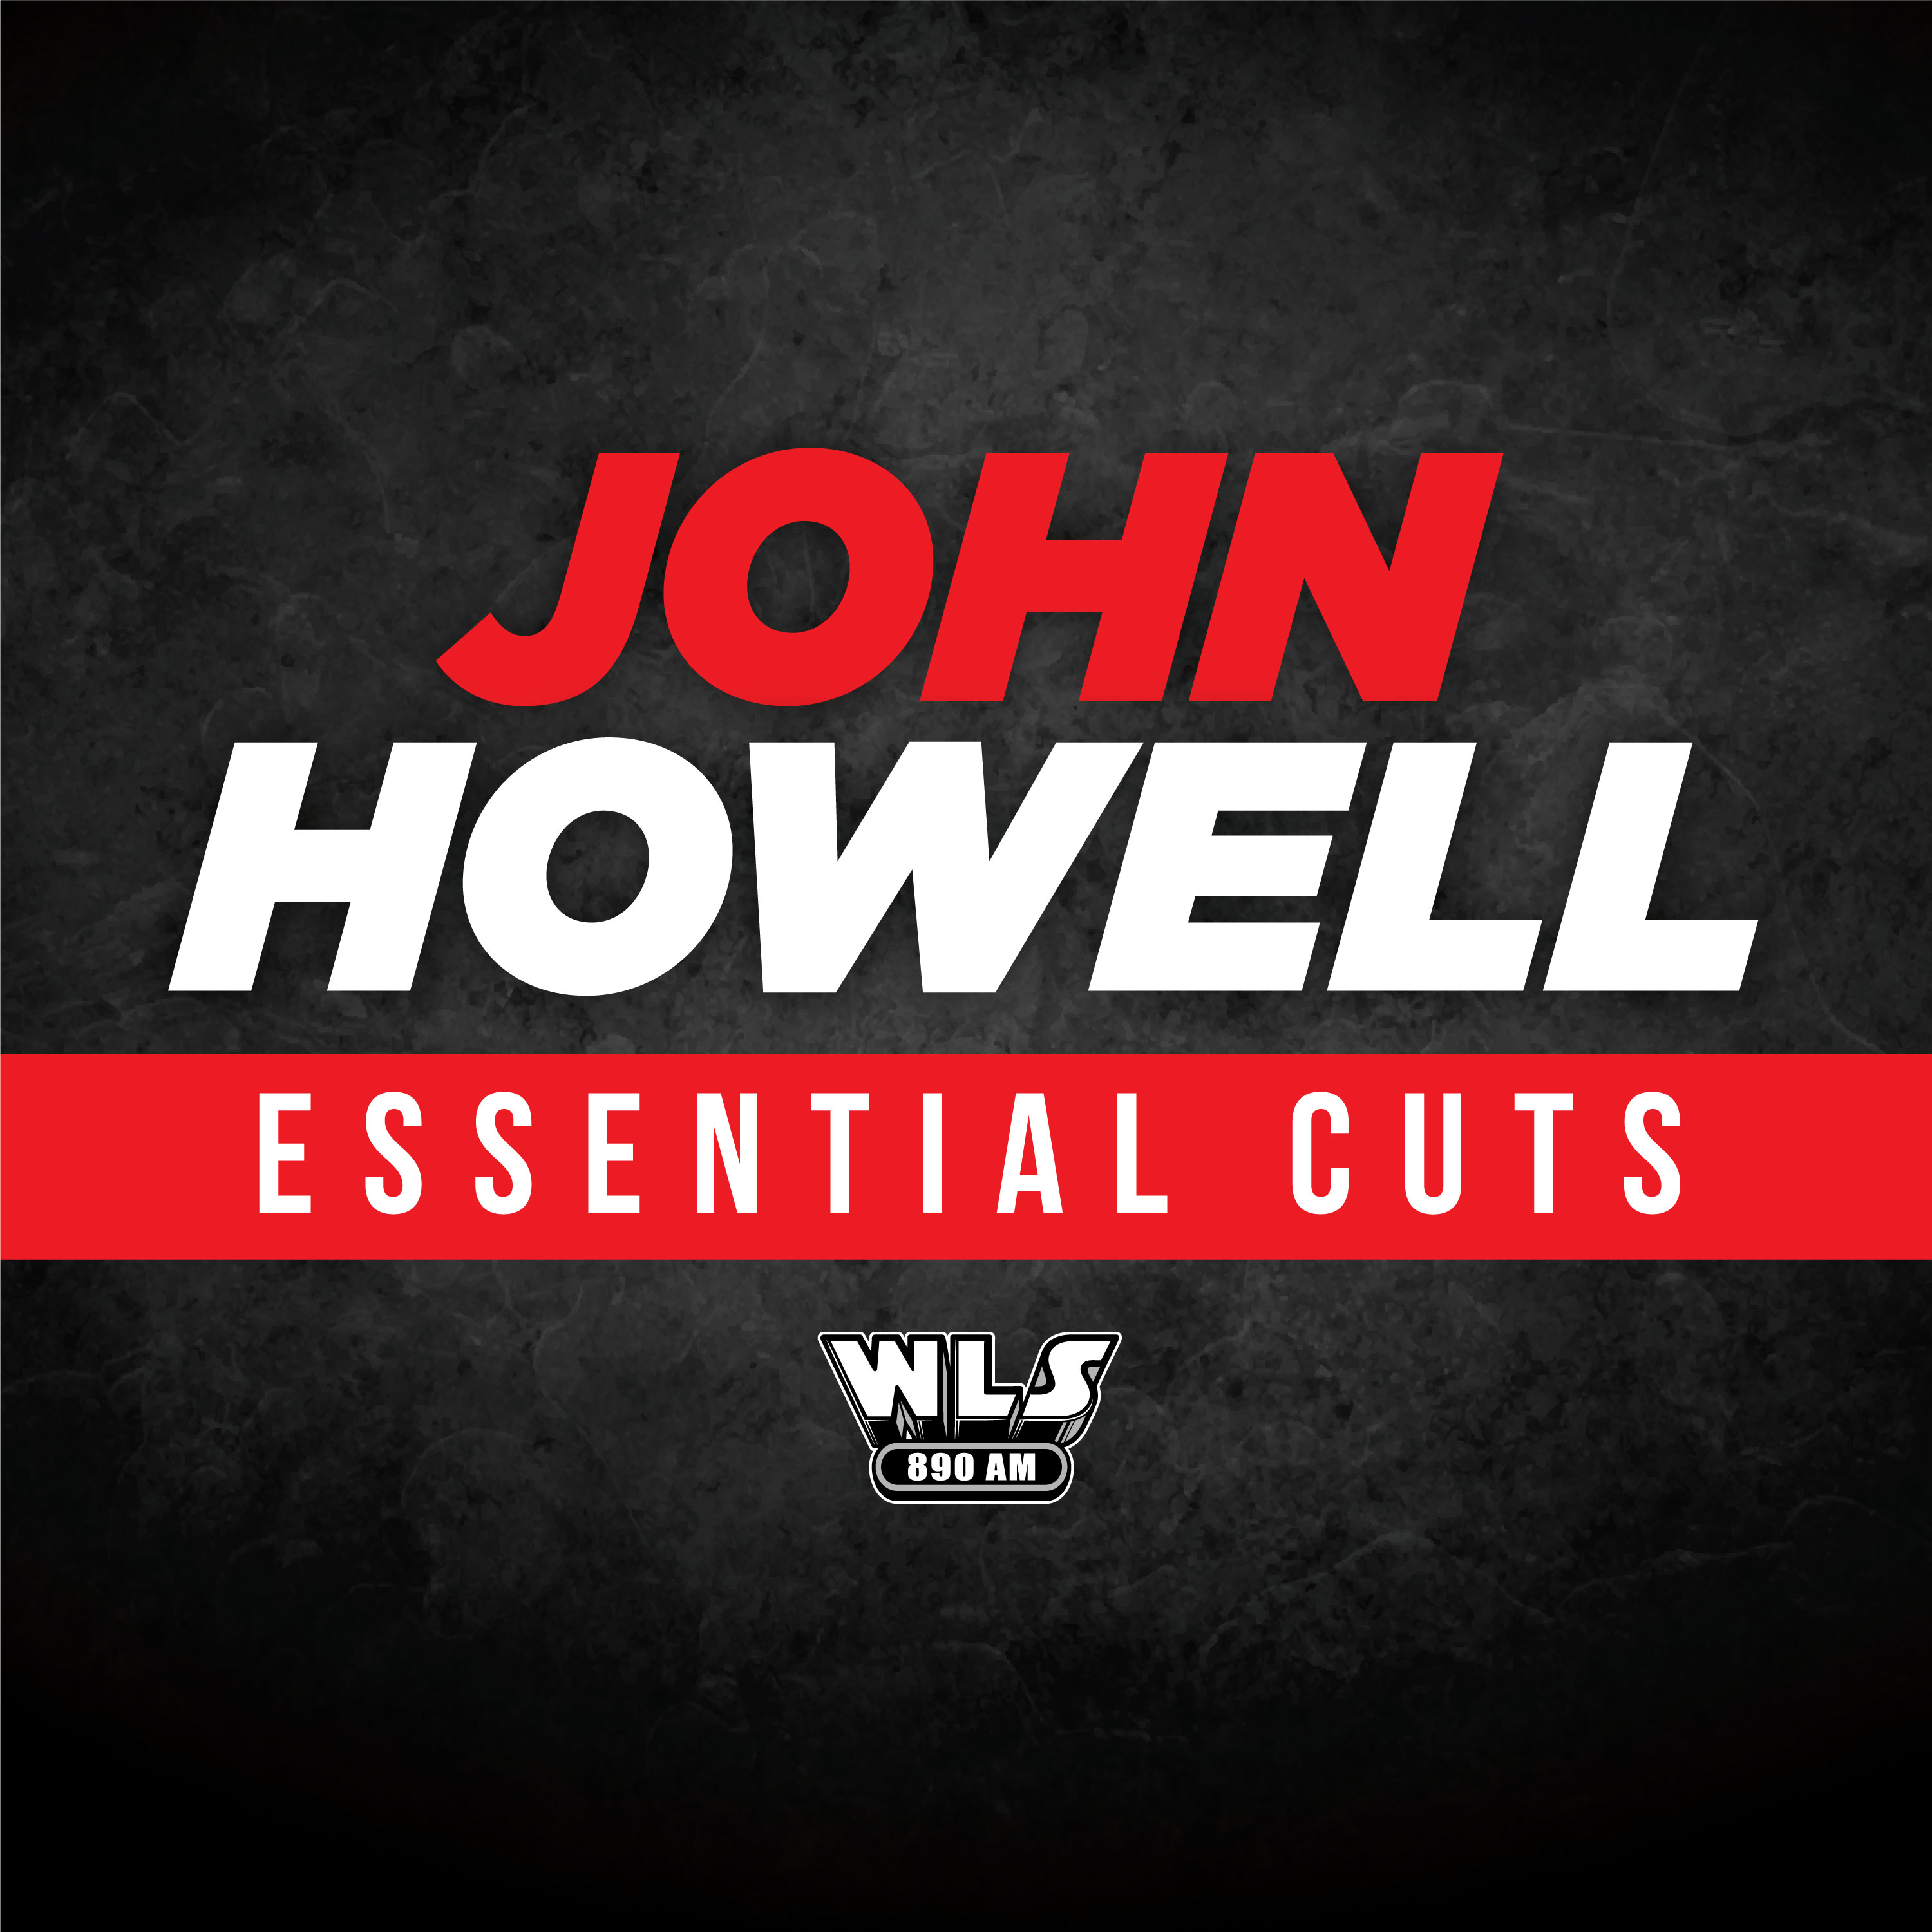 John Howell: Essential Cuts (04/03) - Jazz Appreciation Month & Trump Arrives in NYC